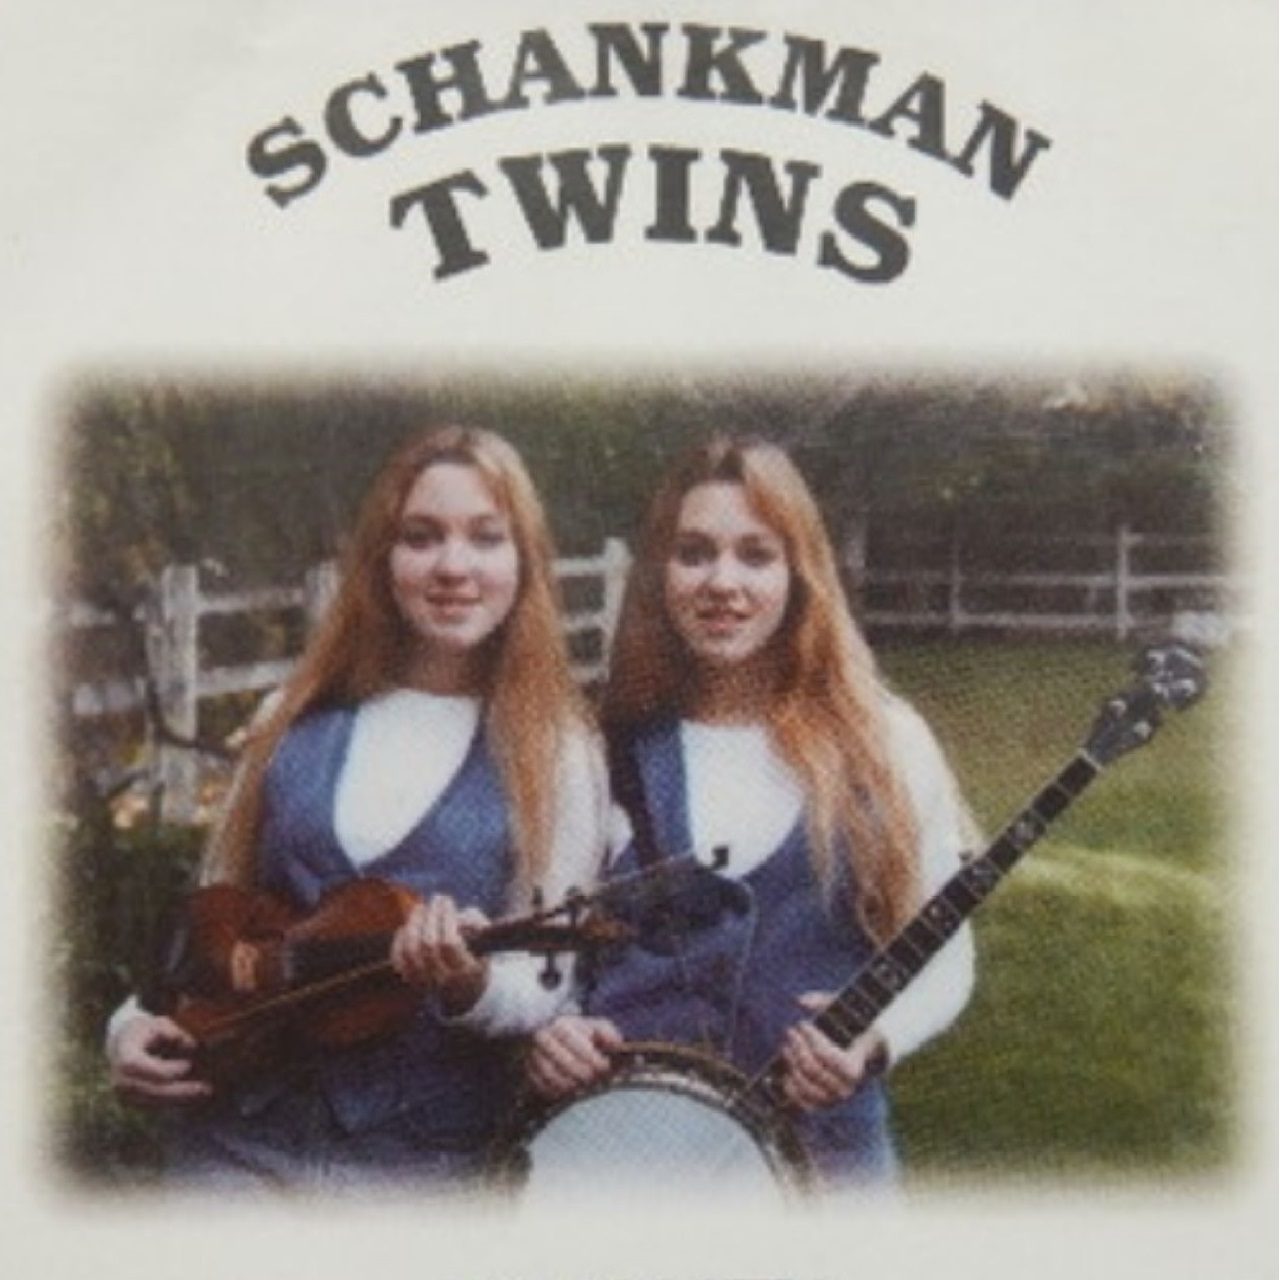 Shankman Twins